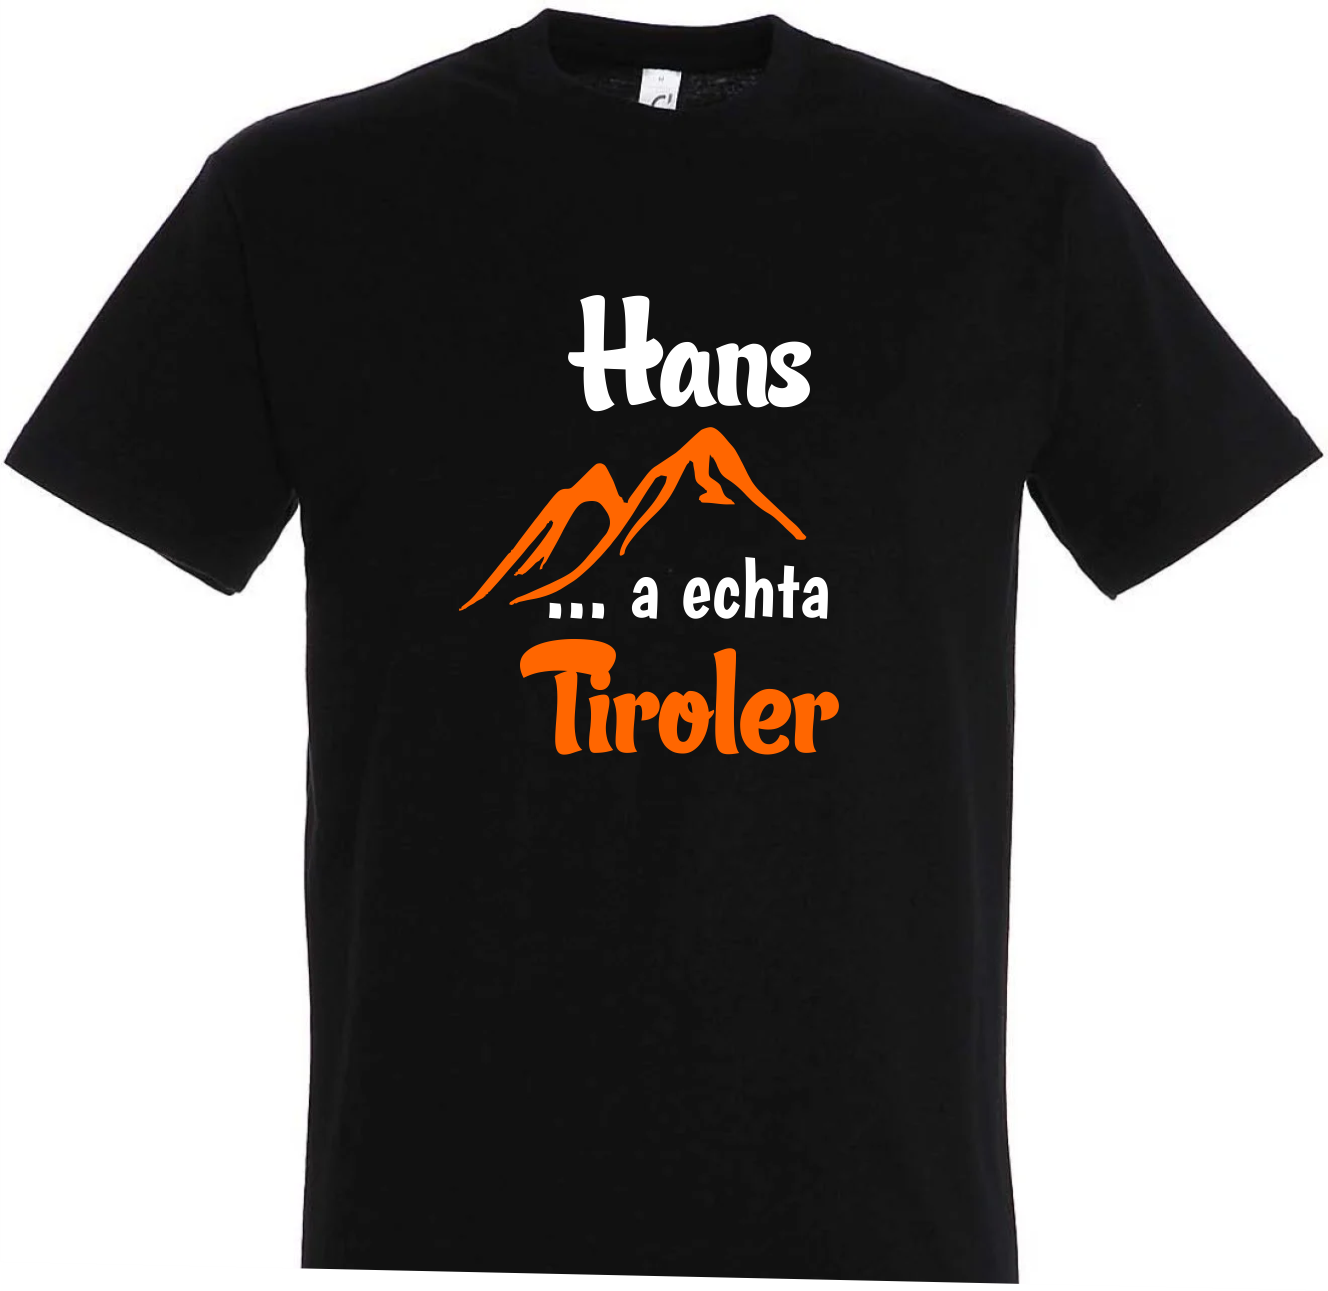 ...T-Shirt mit Namen - Tirol T-Shirt schwarz Herren